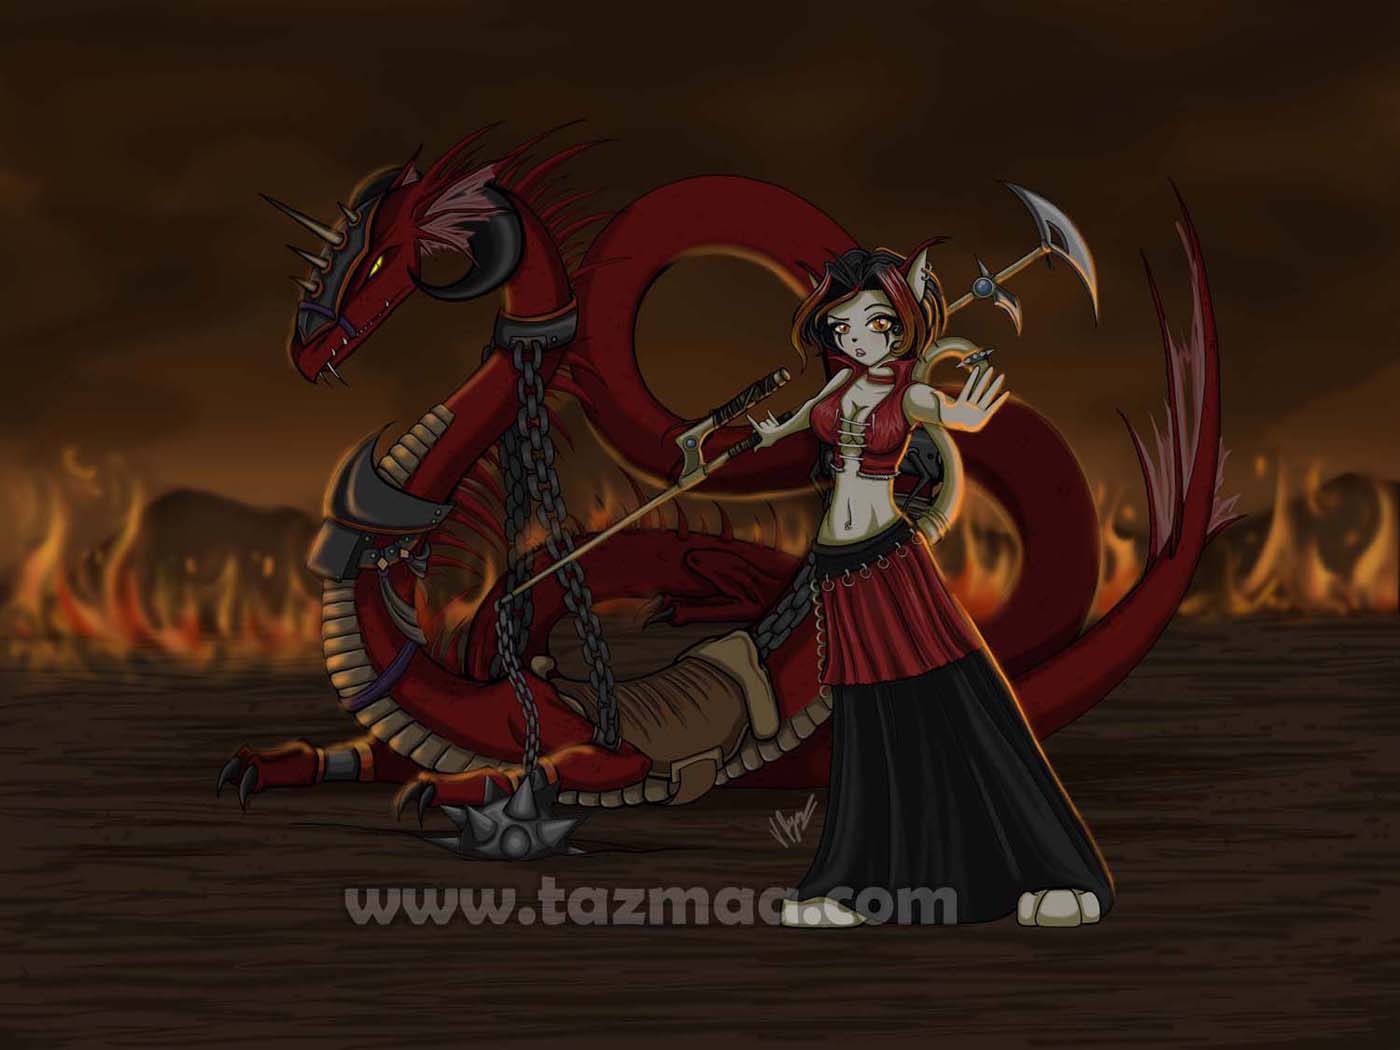 A Anime Catgirl & Armored Dragon by Tazmaa